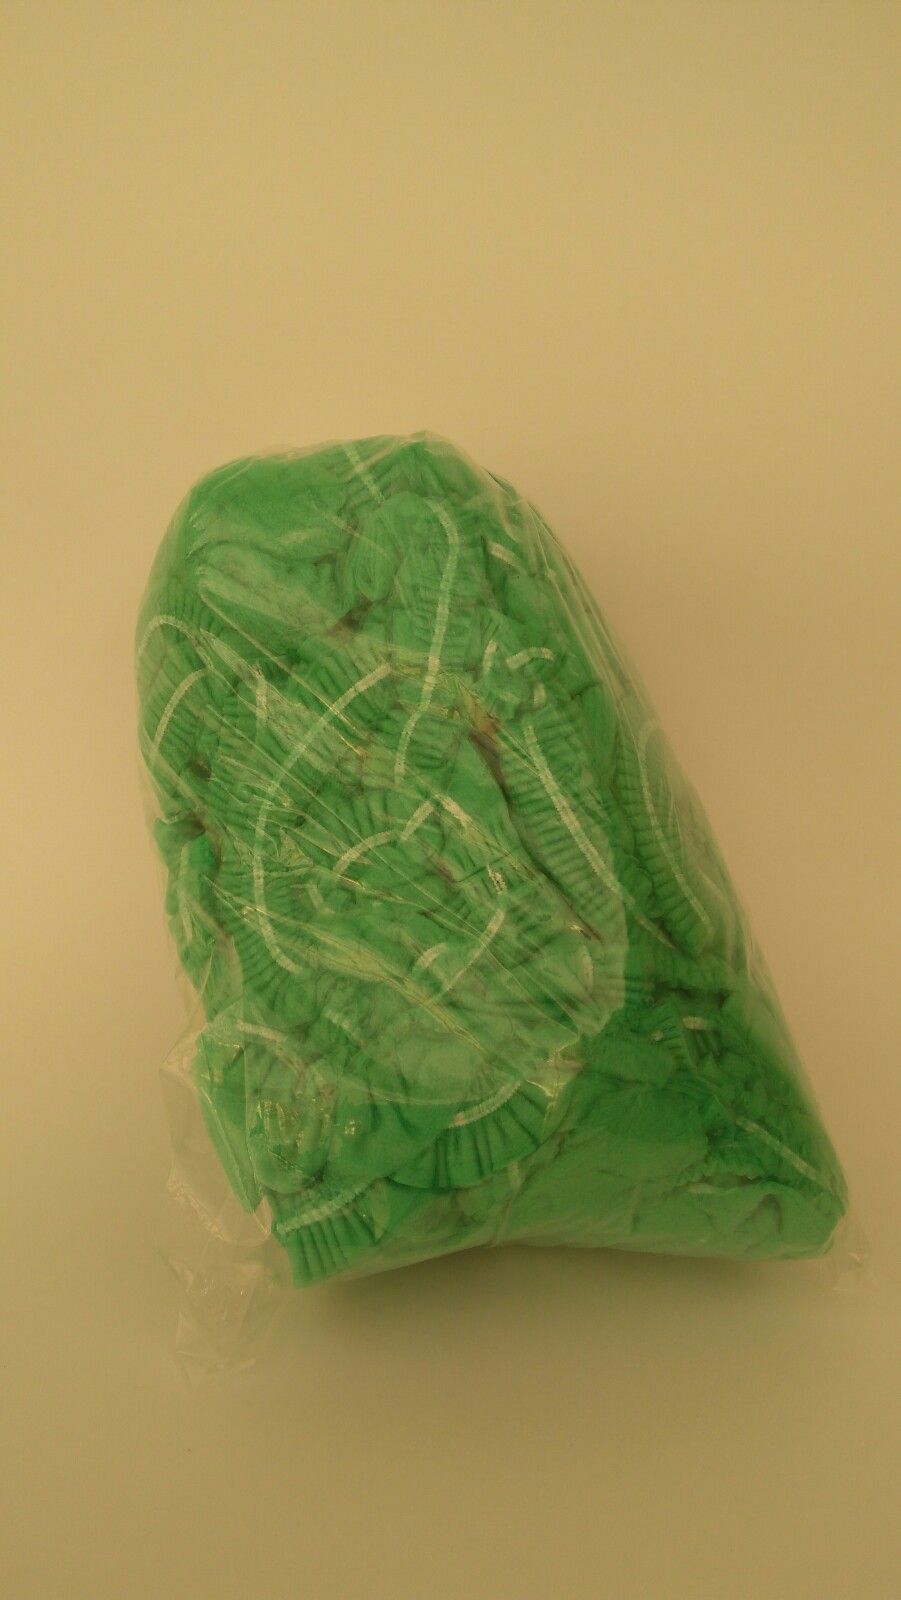 jednorazová čiapka lekarska obvod 52cm zelena 100ks